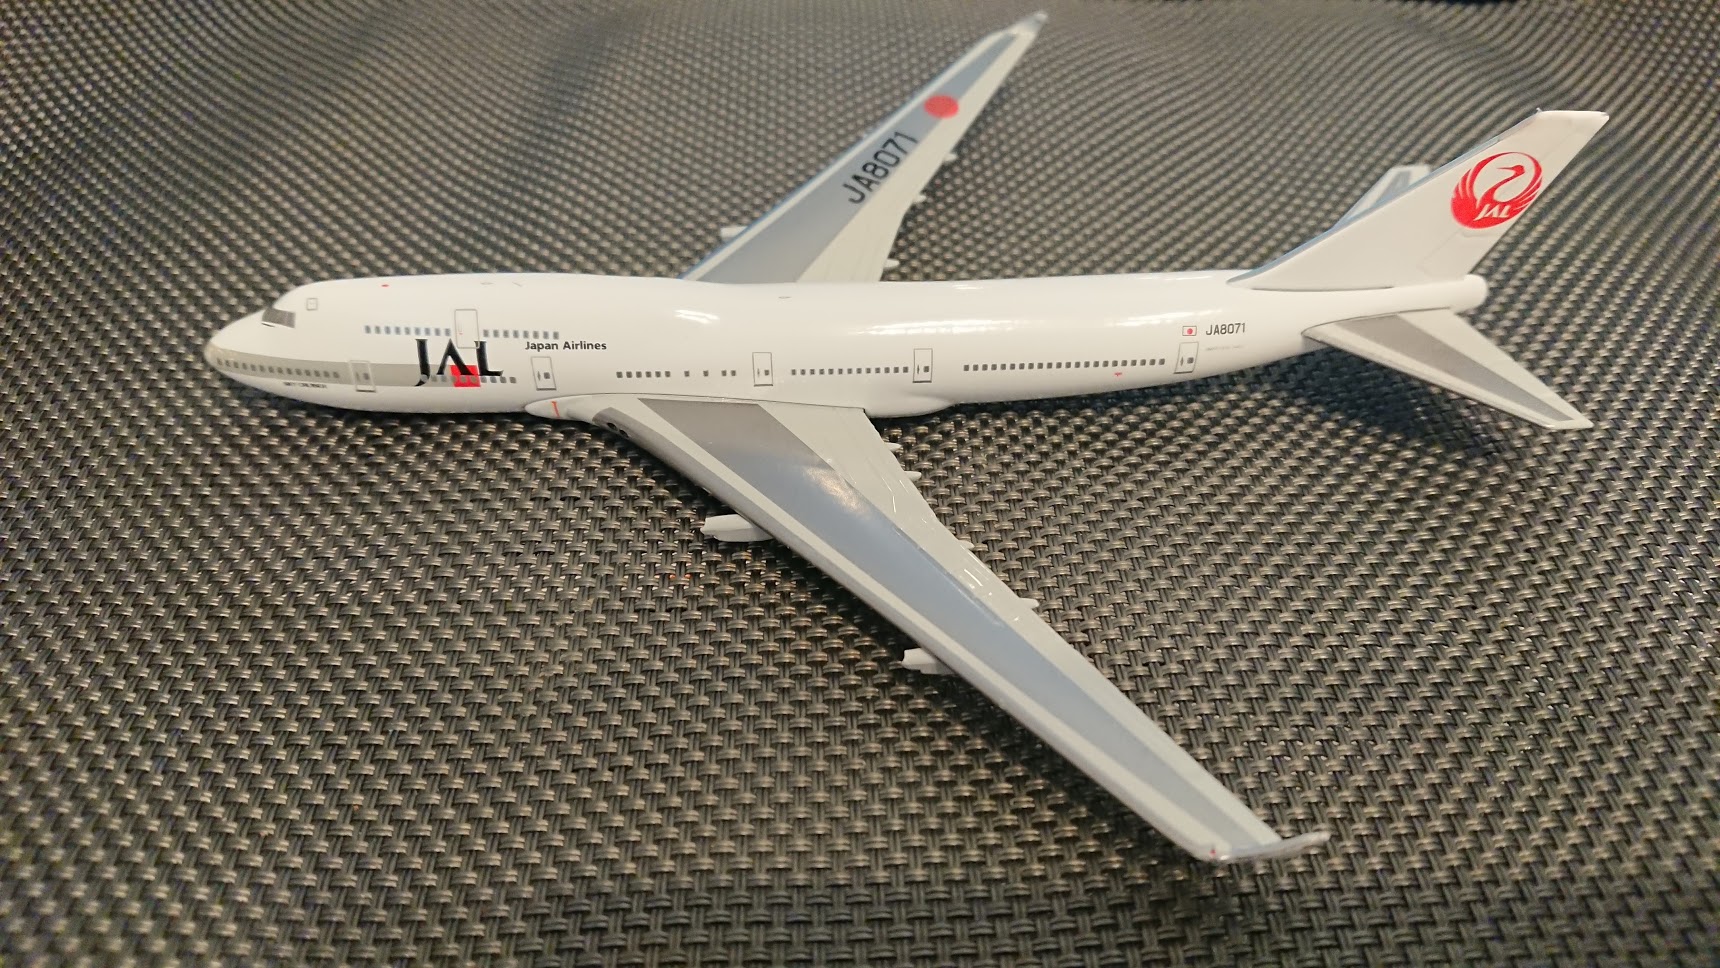 JAL】デアゴスティーニ JAL旅客機コレクションNo.4 B747-400 定期購読感想・レビュー | Okko's Life Blog